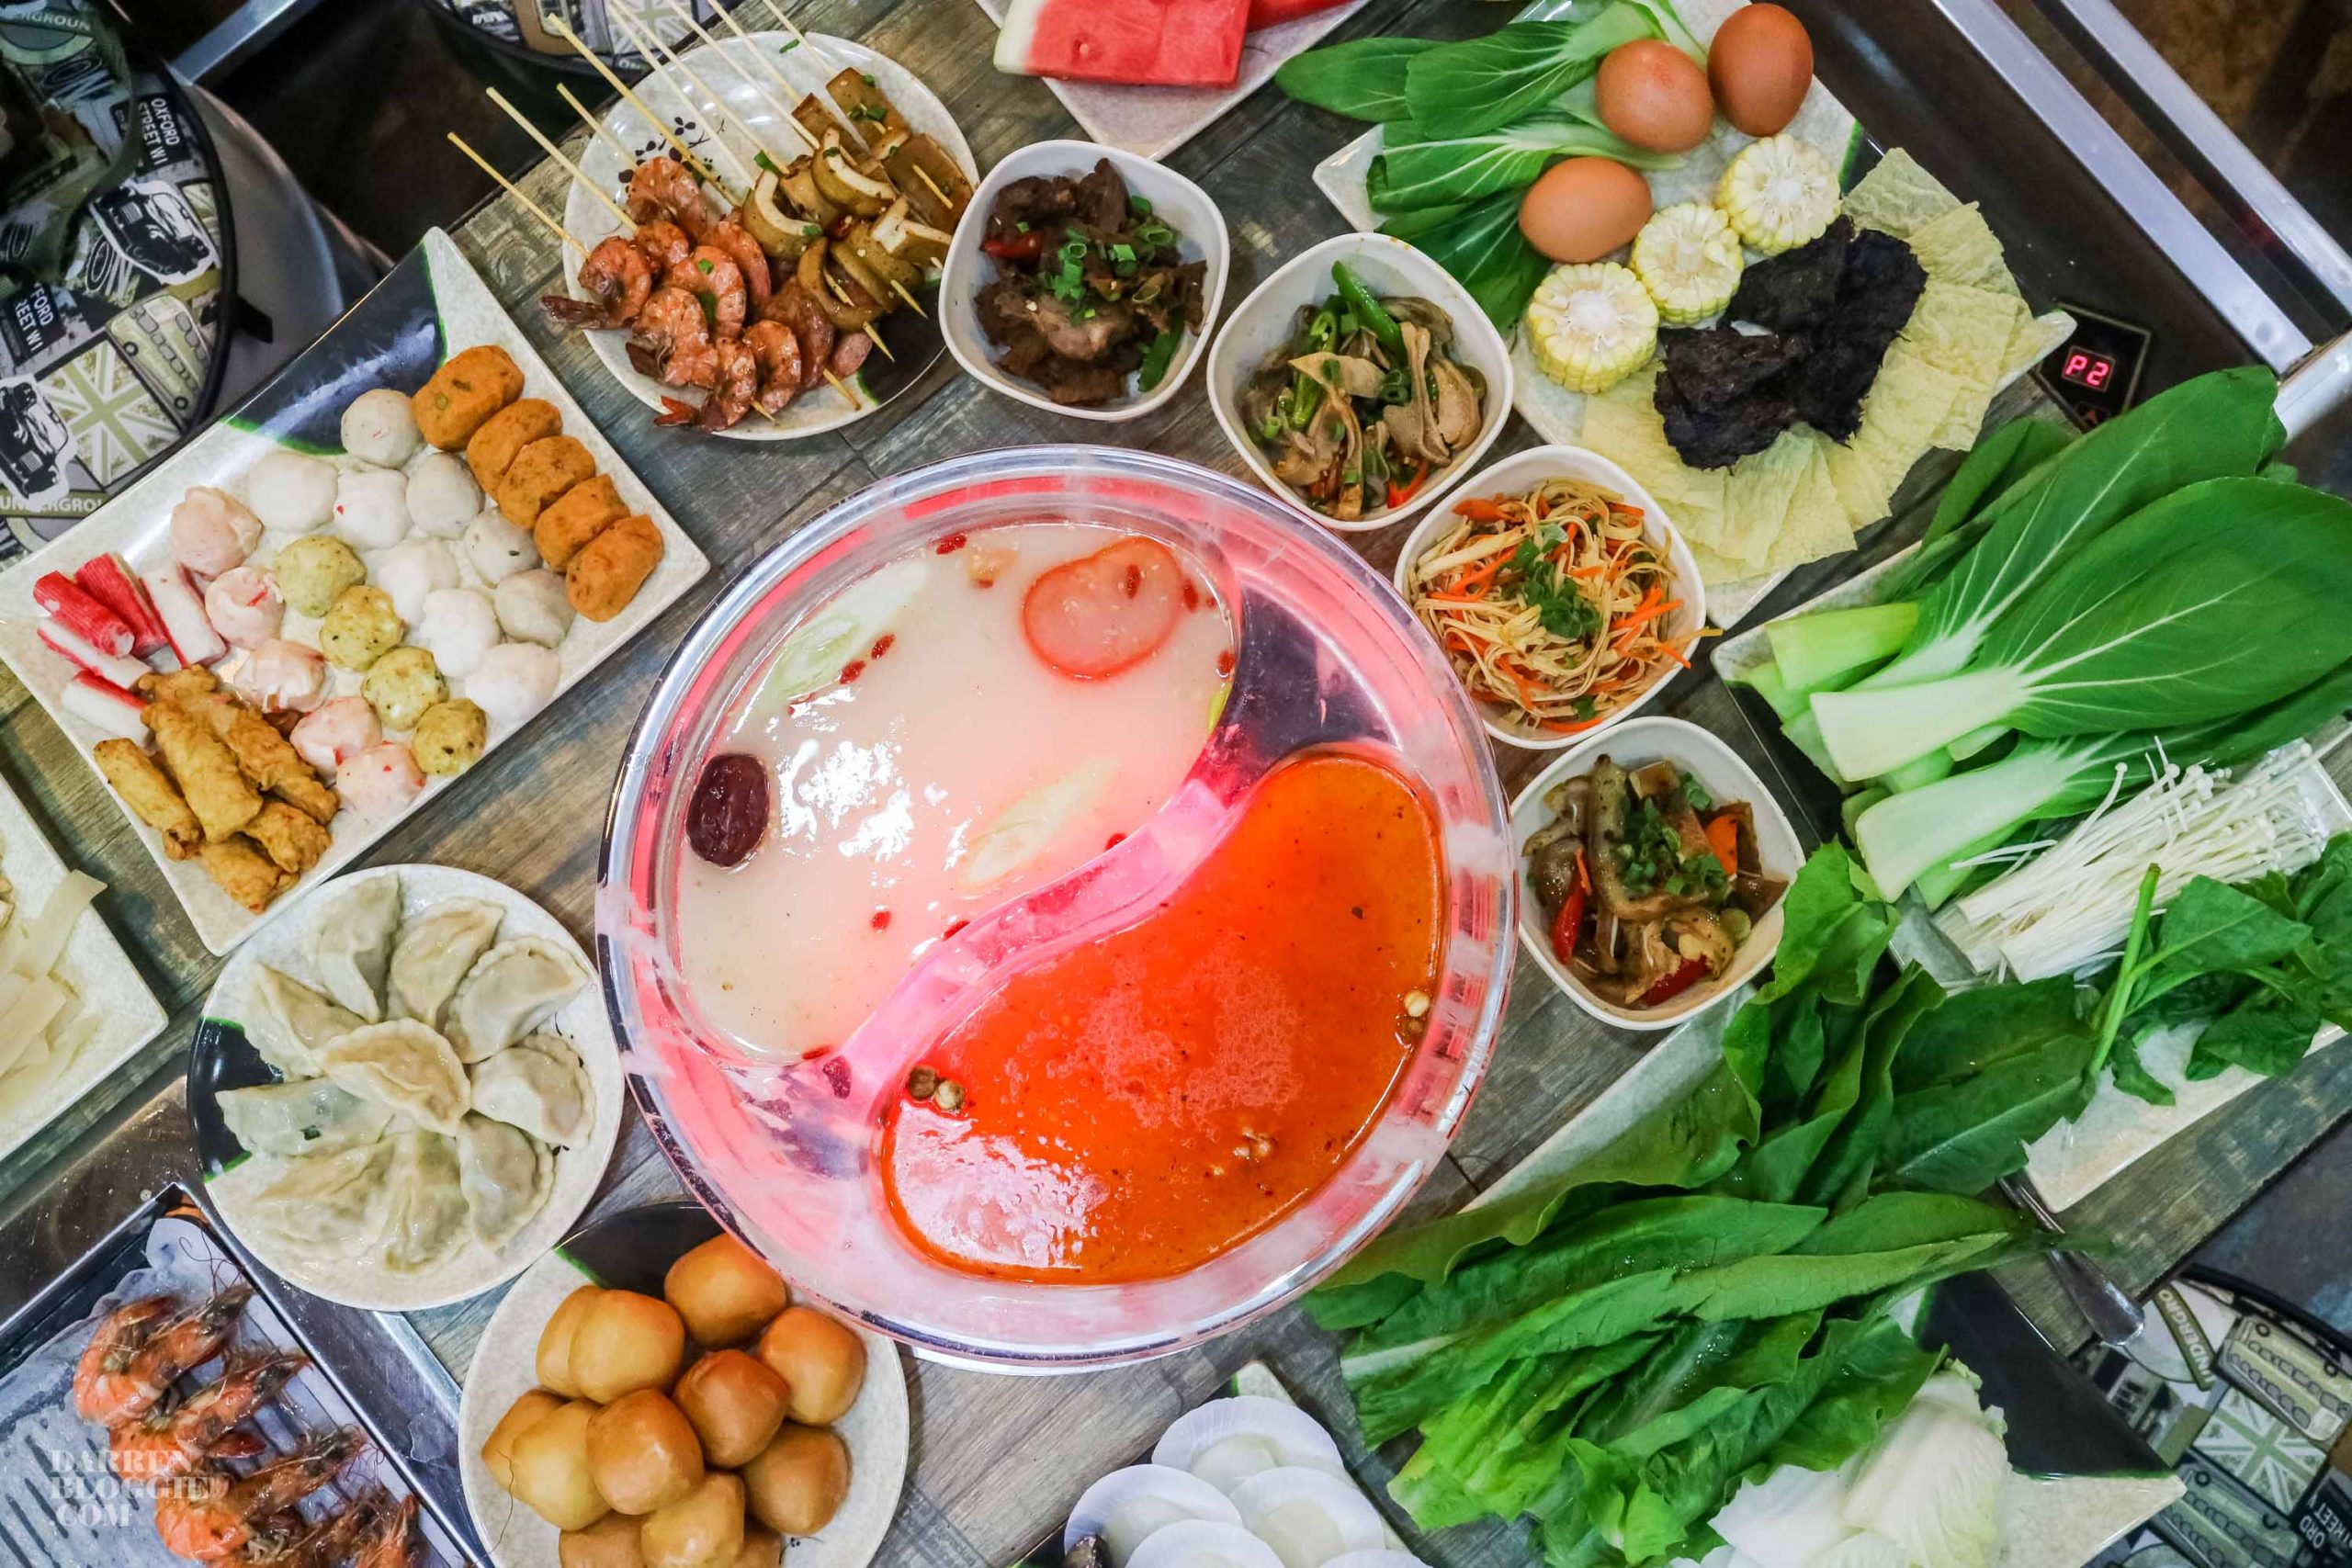 Hao Lai Wu Steamboat & BBQ 好来屋火锅烧烤自助 | Darren Bloggie 達人的部落格 - Singapore  Lifestyle Blog